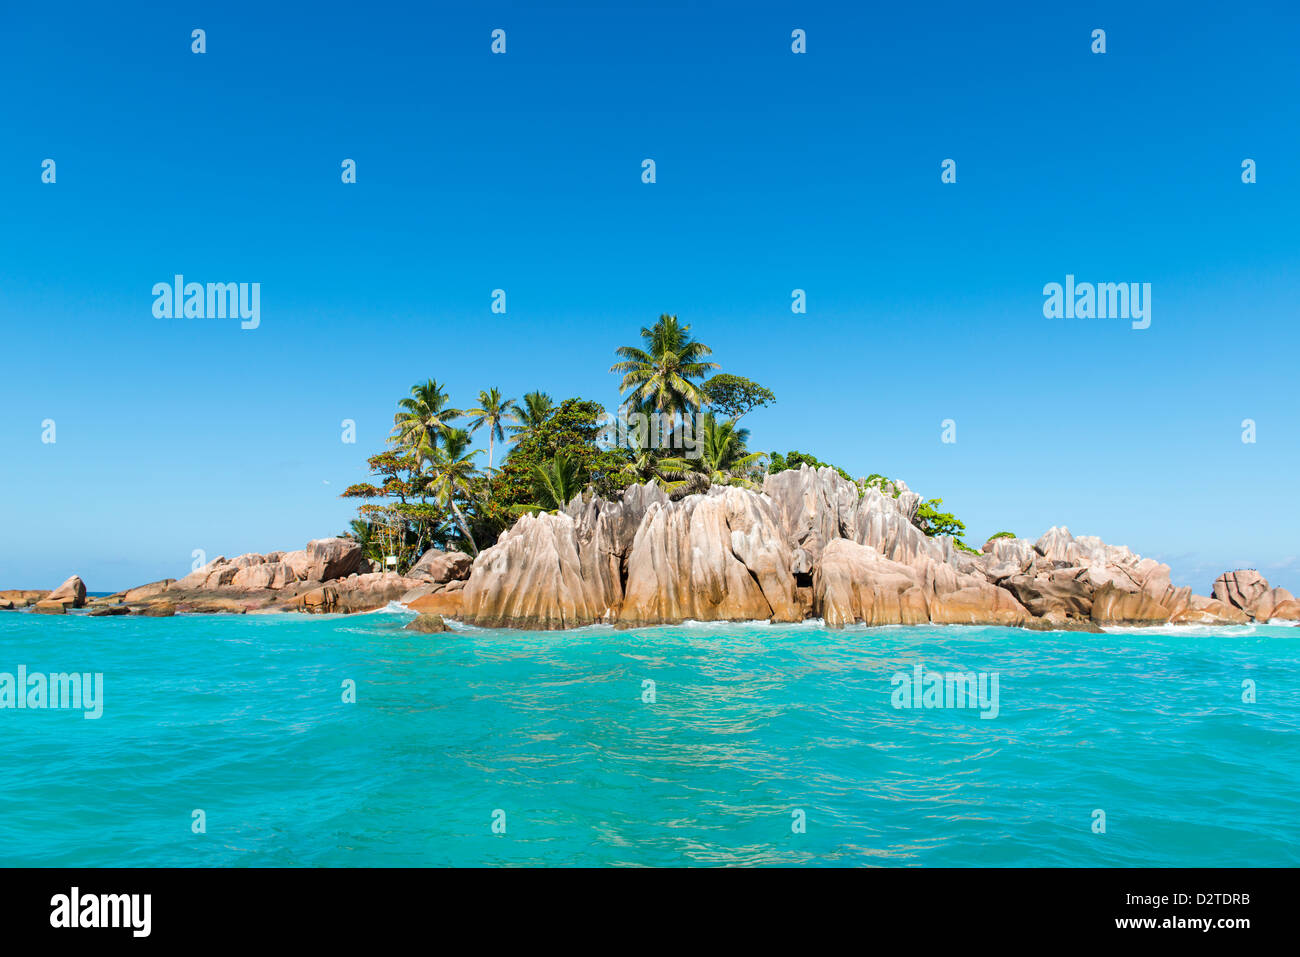 Tropical Island. Calm exotic beach resort in background Stock Photo